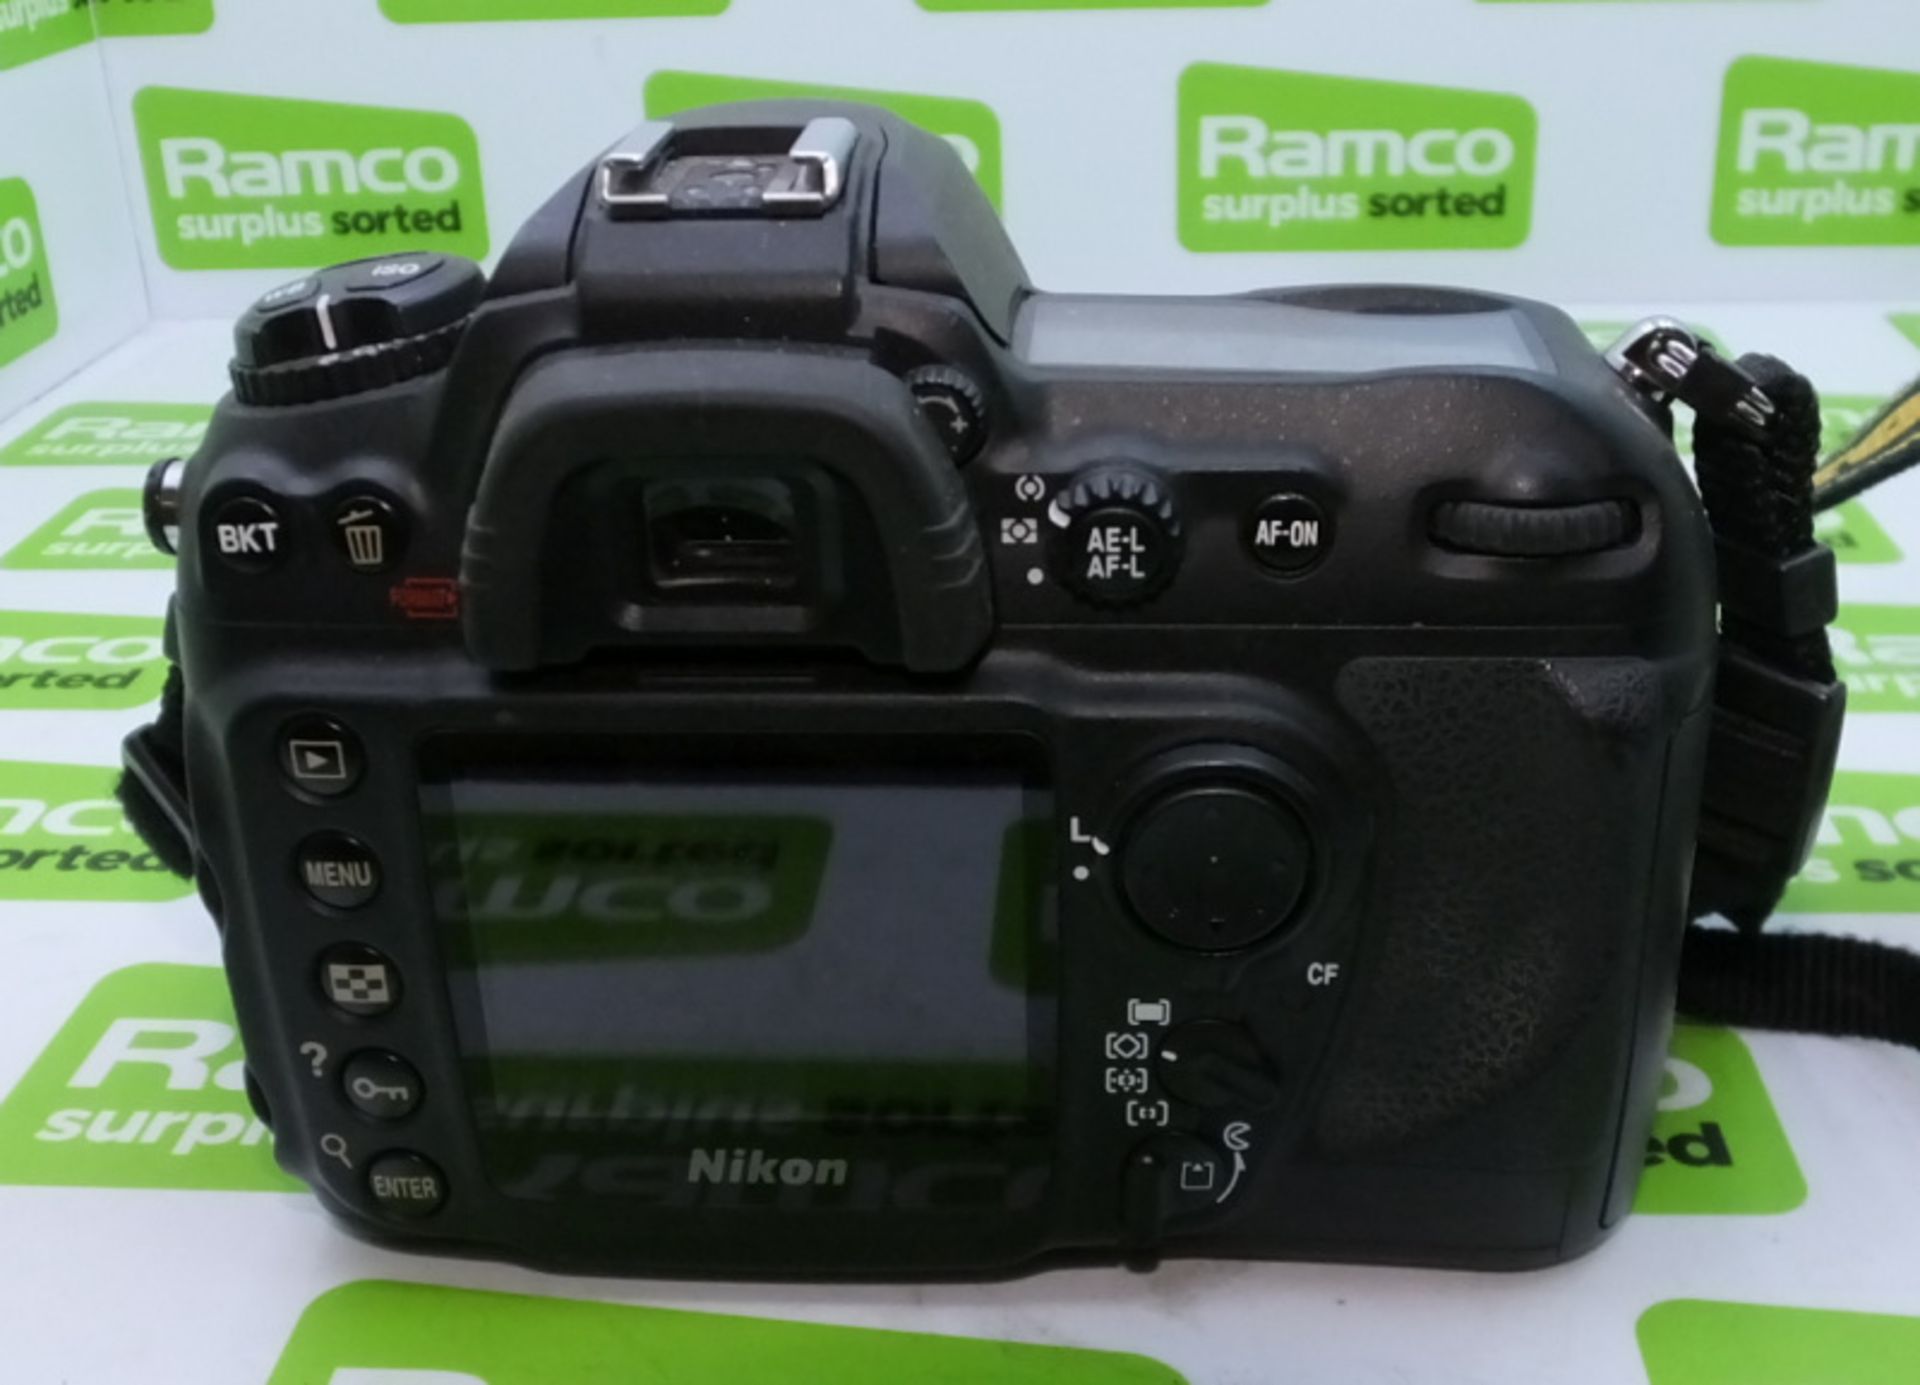 Nikon D200 SLR Digital Camera Body - Image 2 of 3